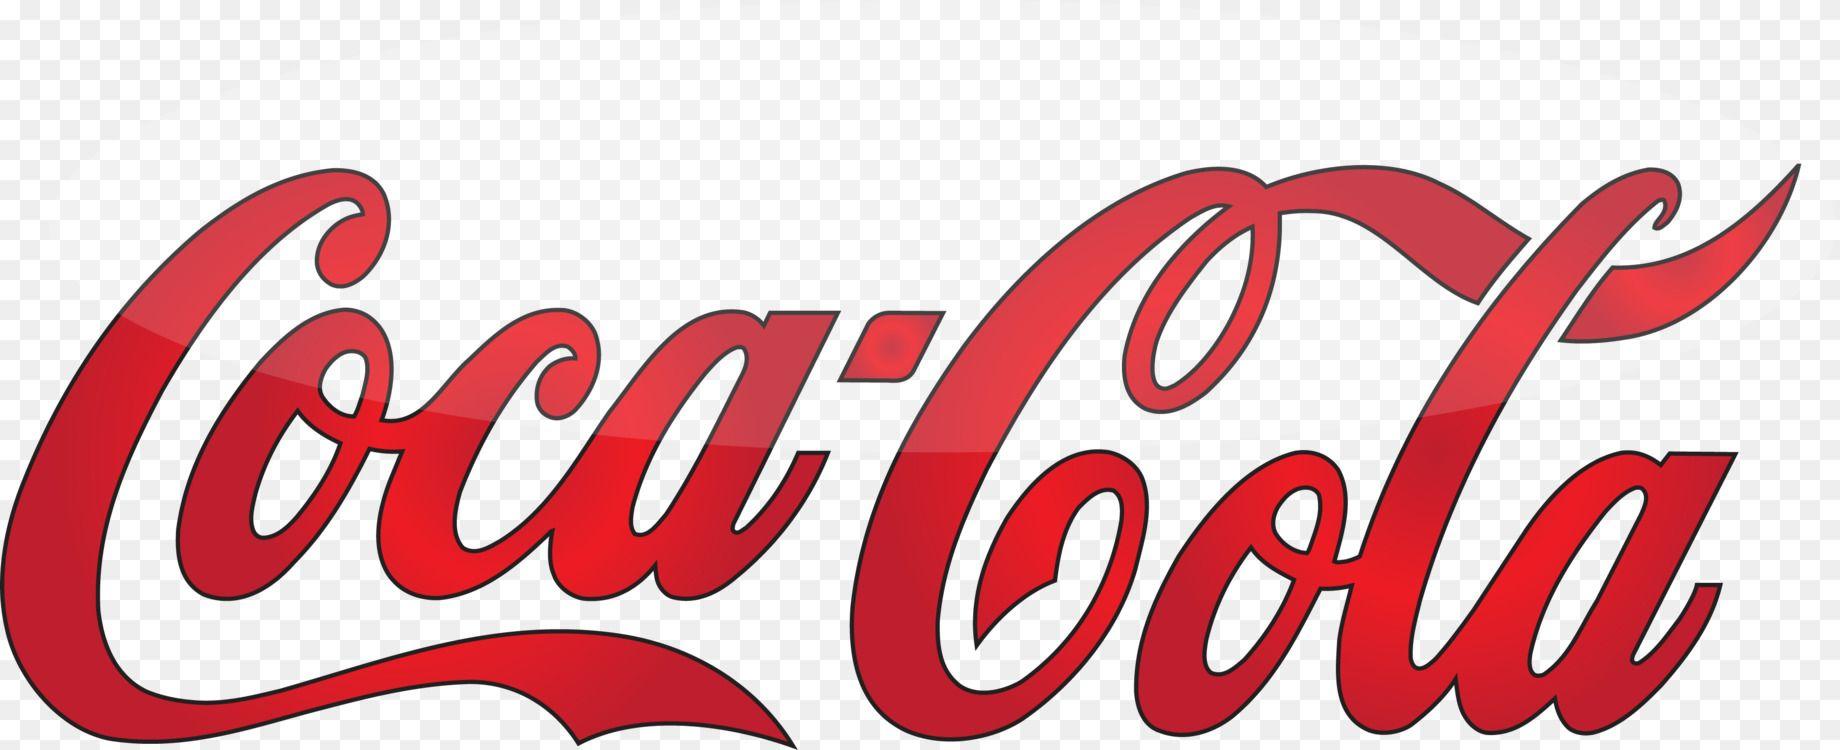 Diet Coke Logo - The Coca-Cola Company Diet Coke Fizzy Drinks Free PNG Image - Coca ...